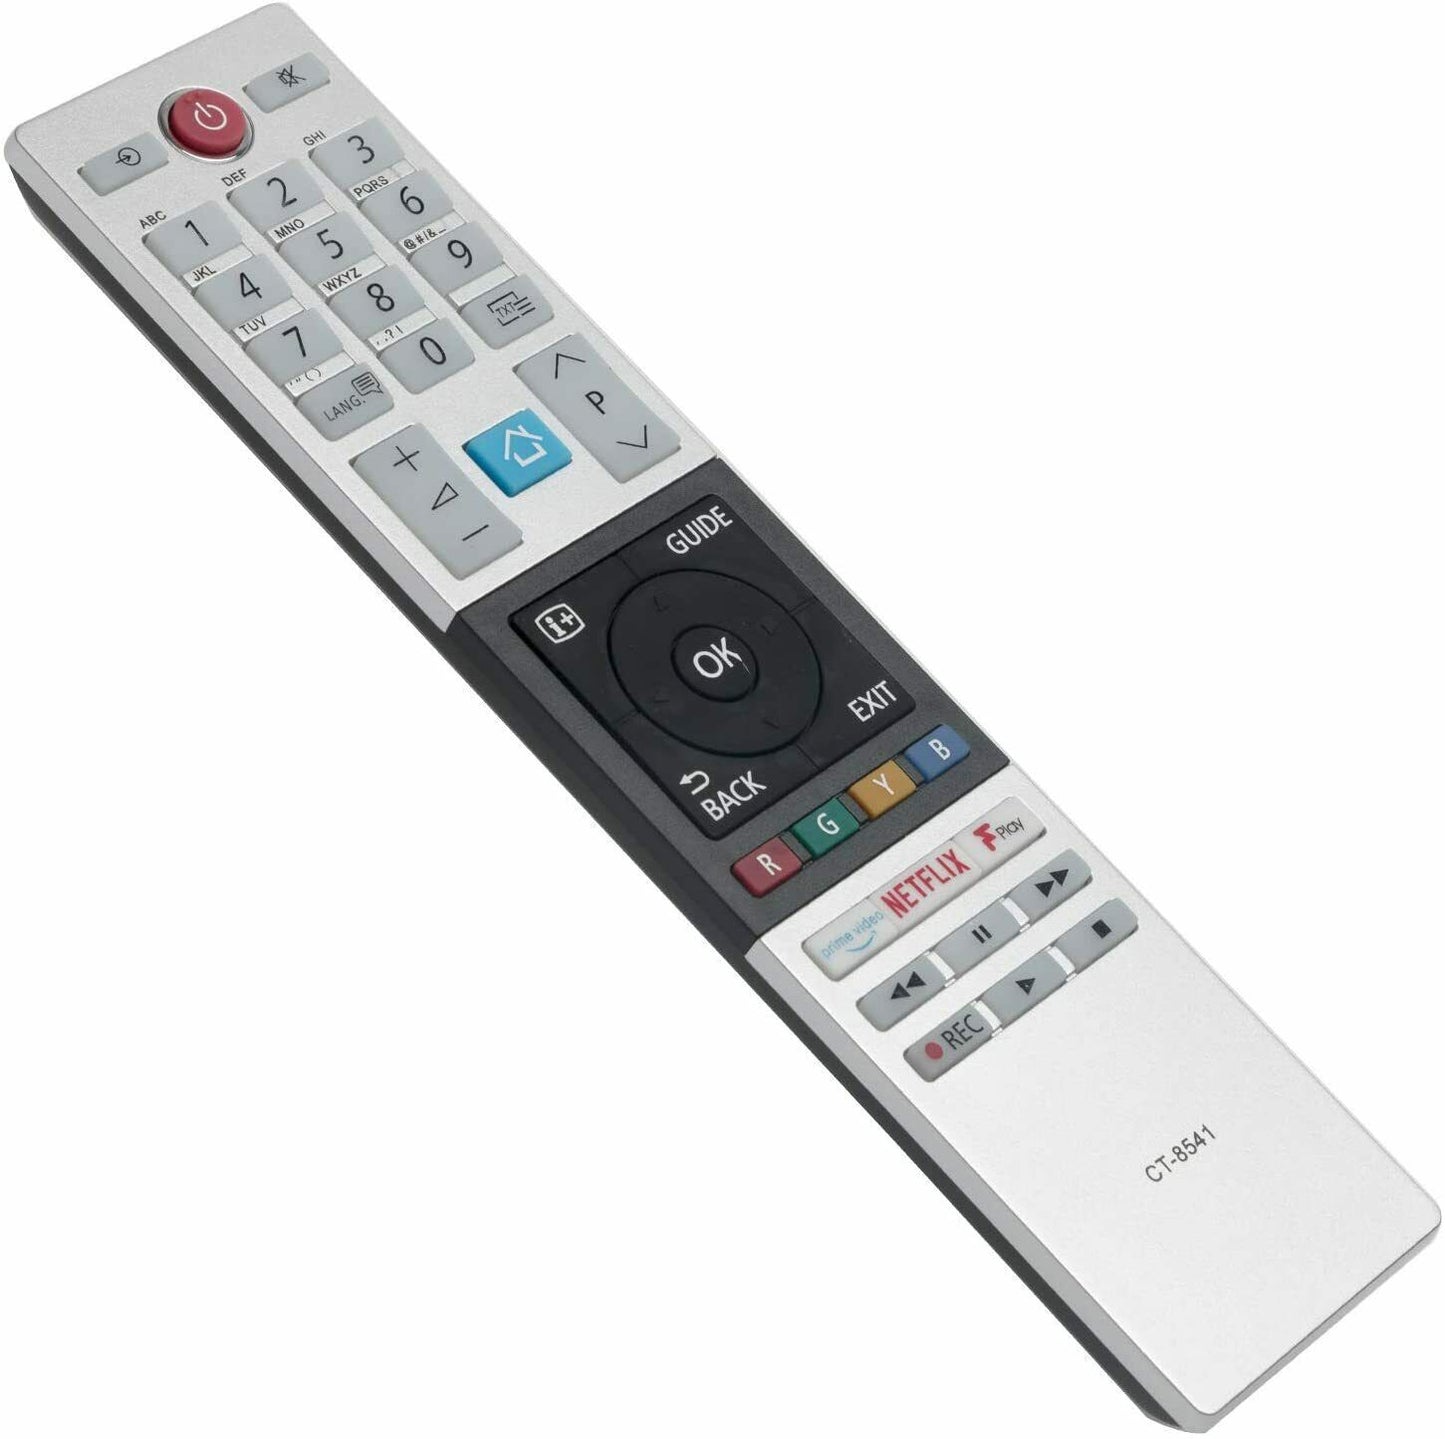 CT-8541 Remote Control For Toshiba NETFLIX Smart LED TV 24W2863DB